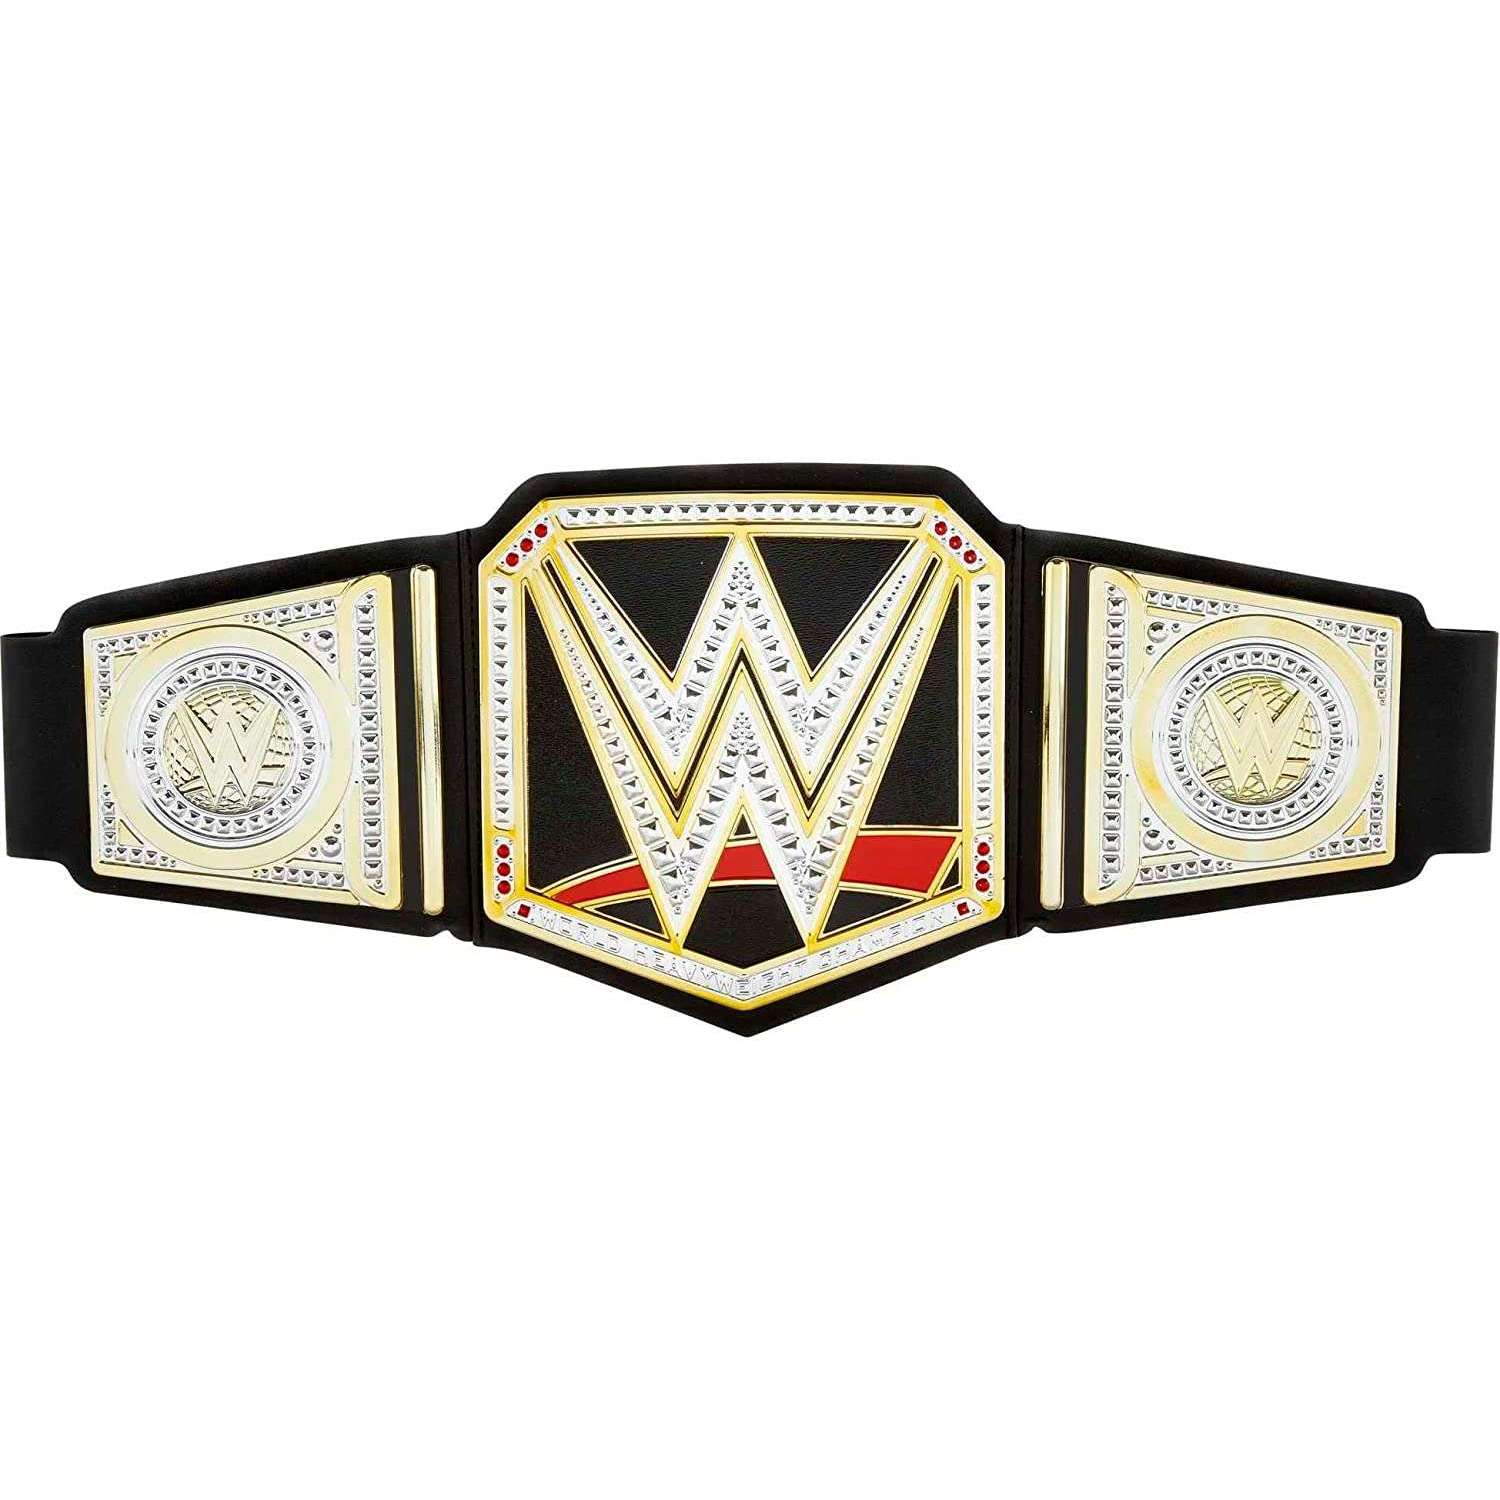 Toys N Tuck:WWE Championship Belt,WWE